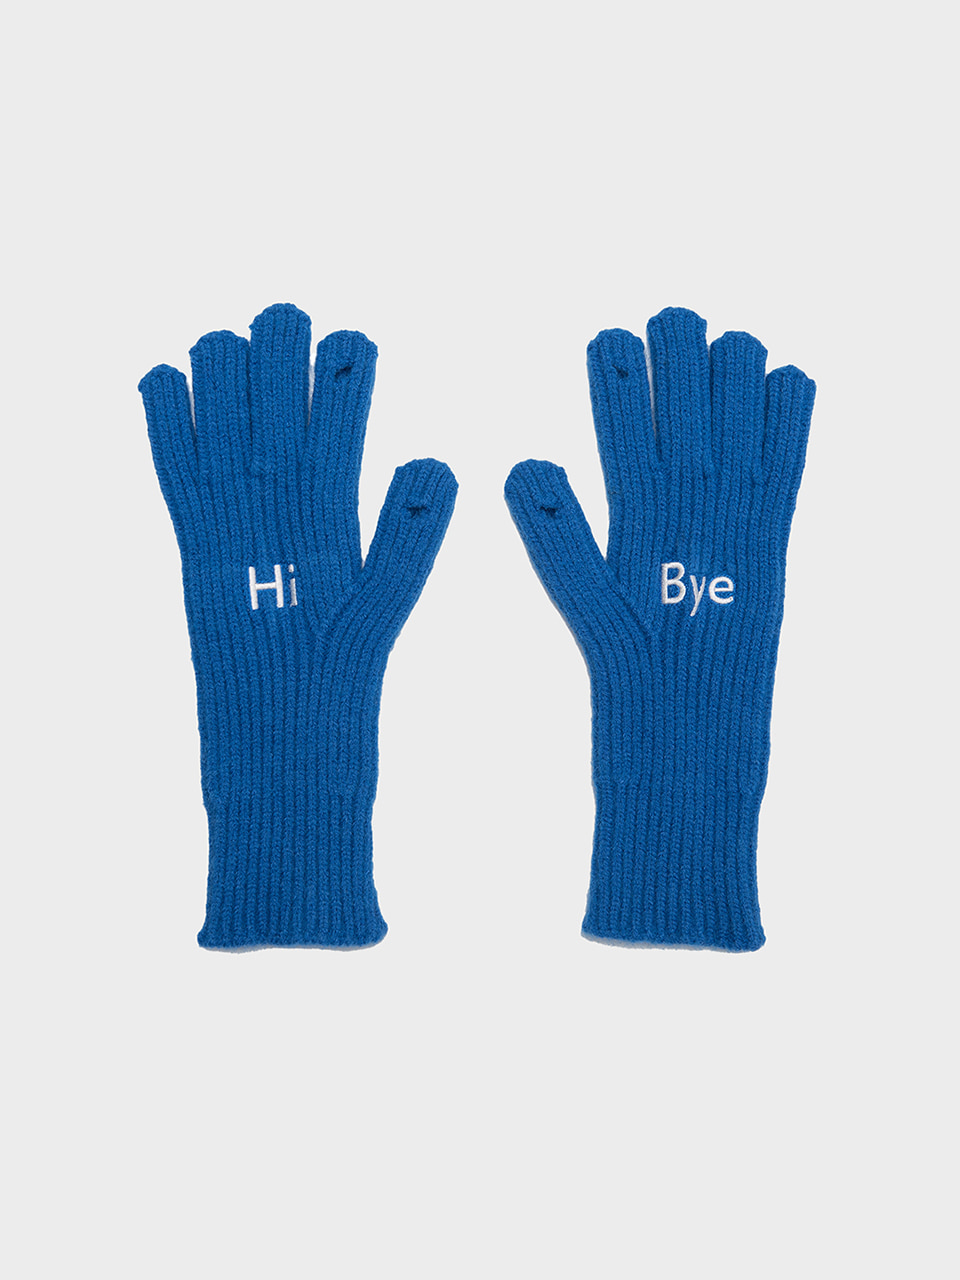 [gift] hi bye gloves - blueBRENDA BRENDEN